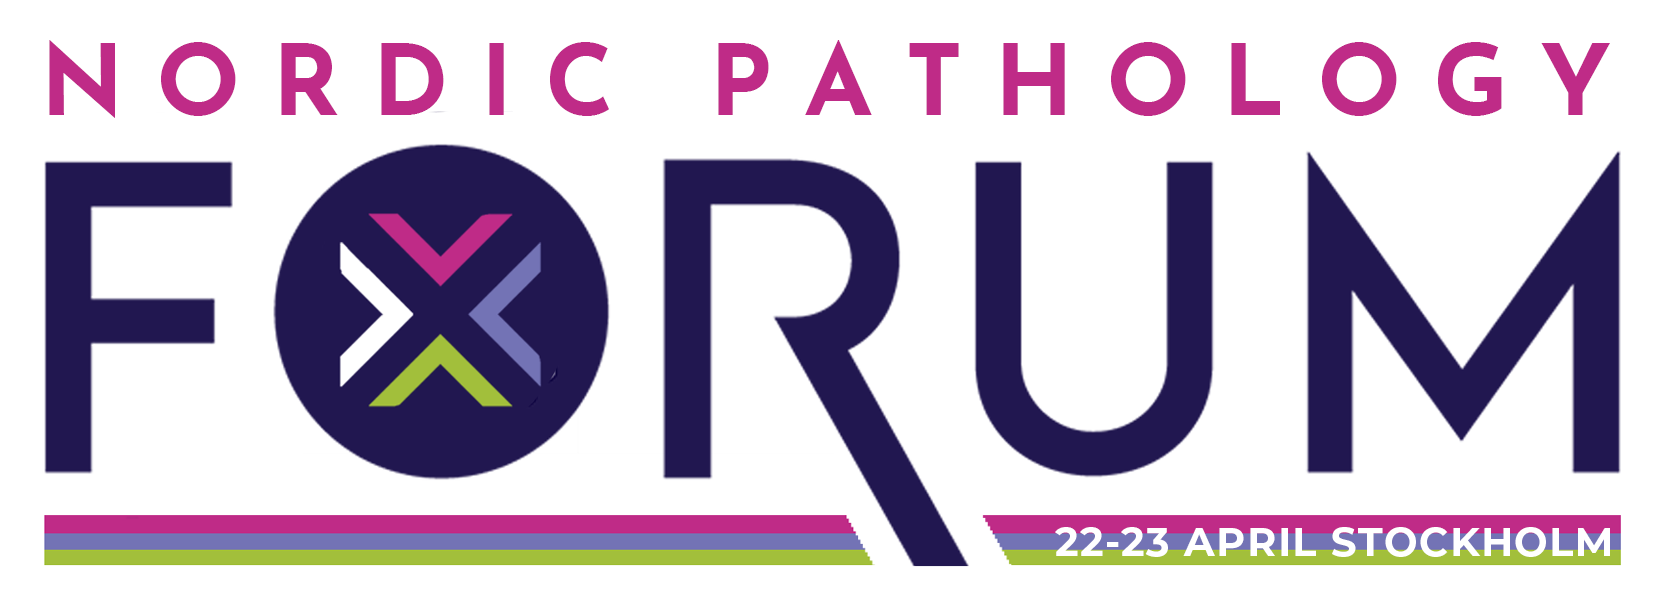 Nordic Pathology logo_final